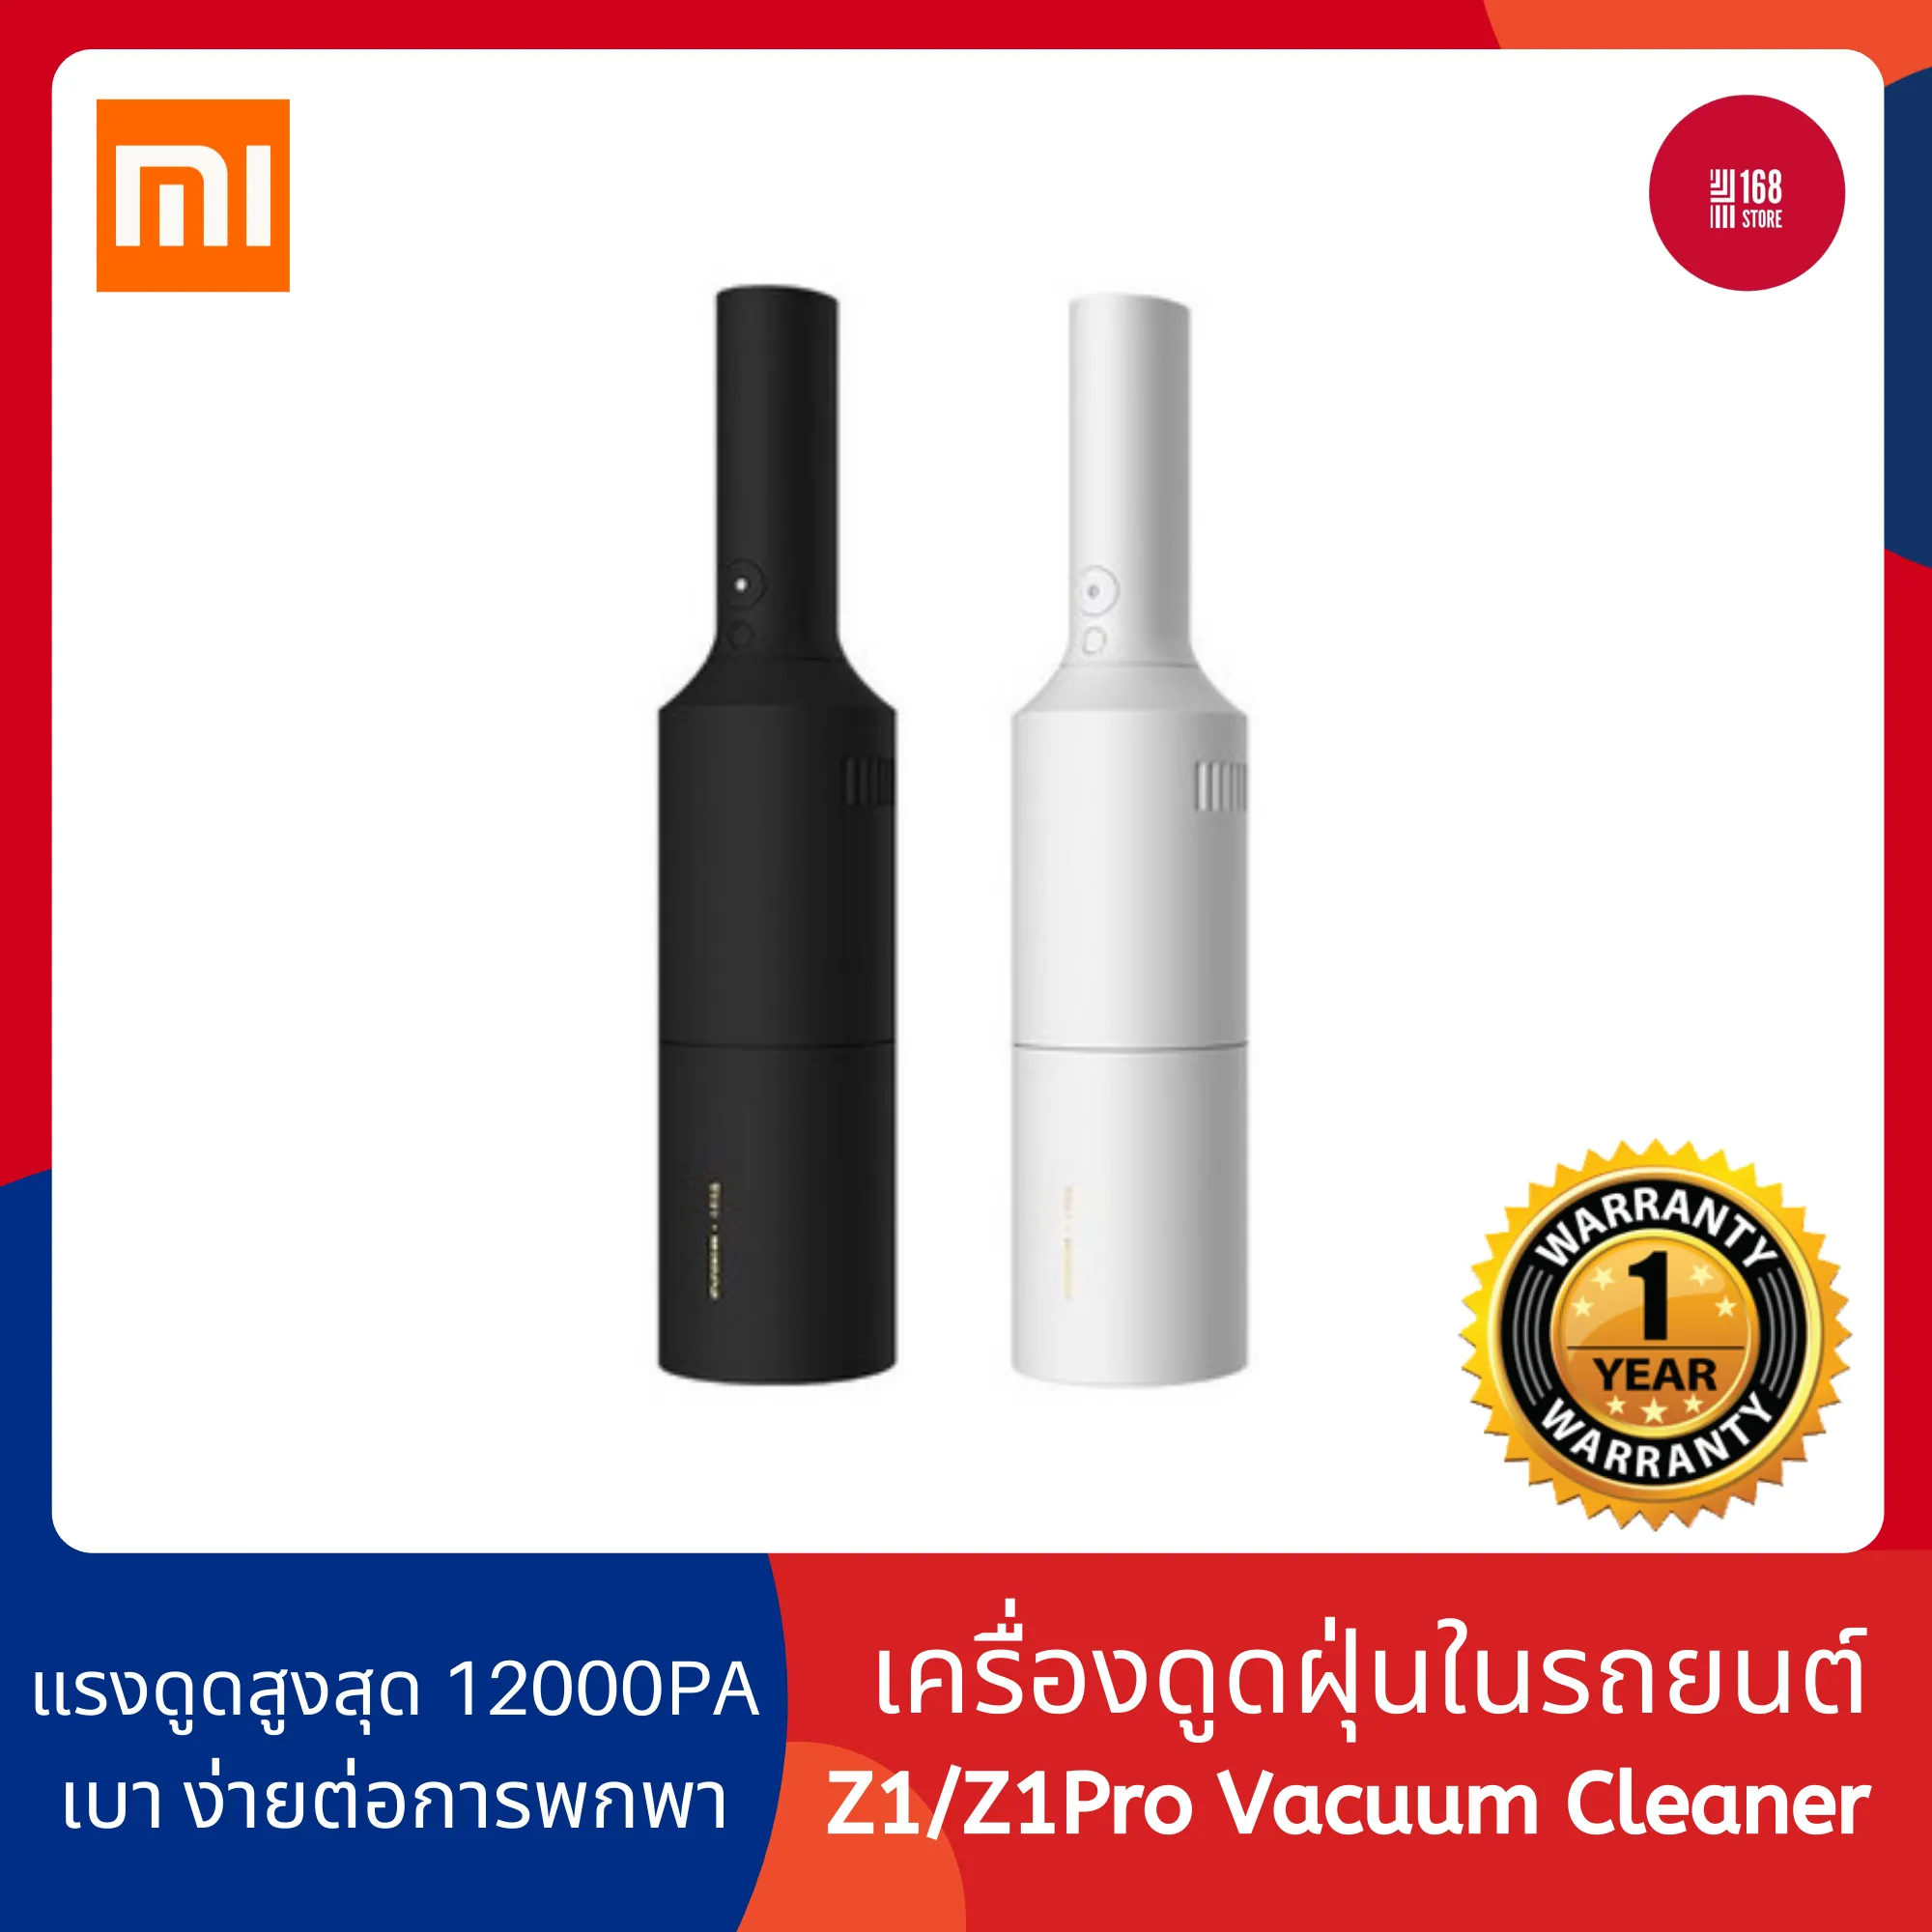 Xiaomi Mijia Handheld Wireless Vacuum Cleaner Z1 / Z1 Pro เครื่องดูดฝุ่นไร้สาย ขนาดพกพา สะดวกต่อการใช้งาน